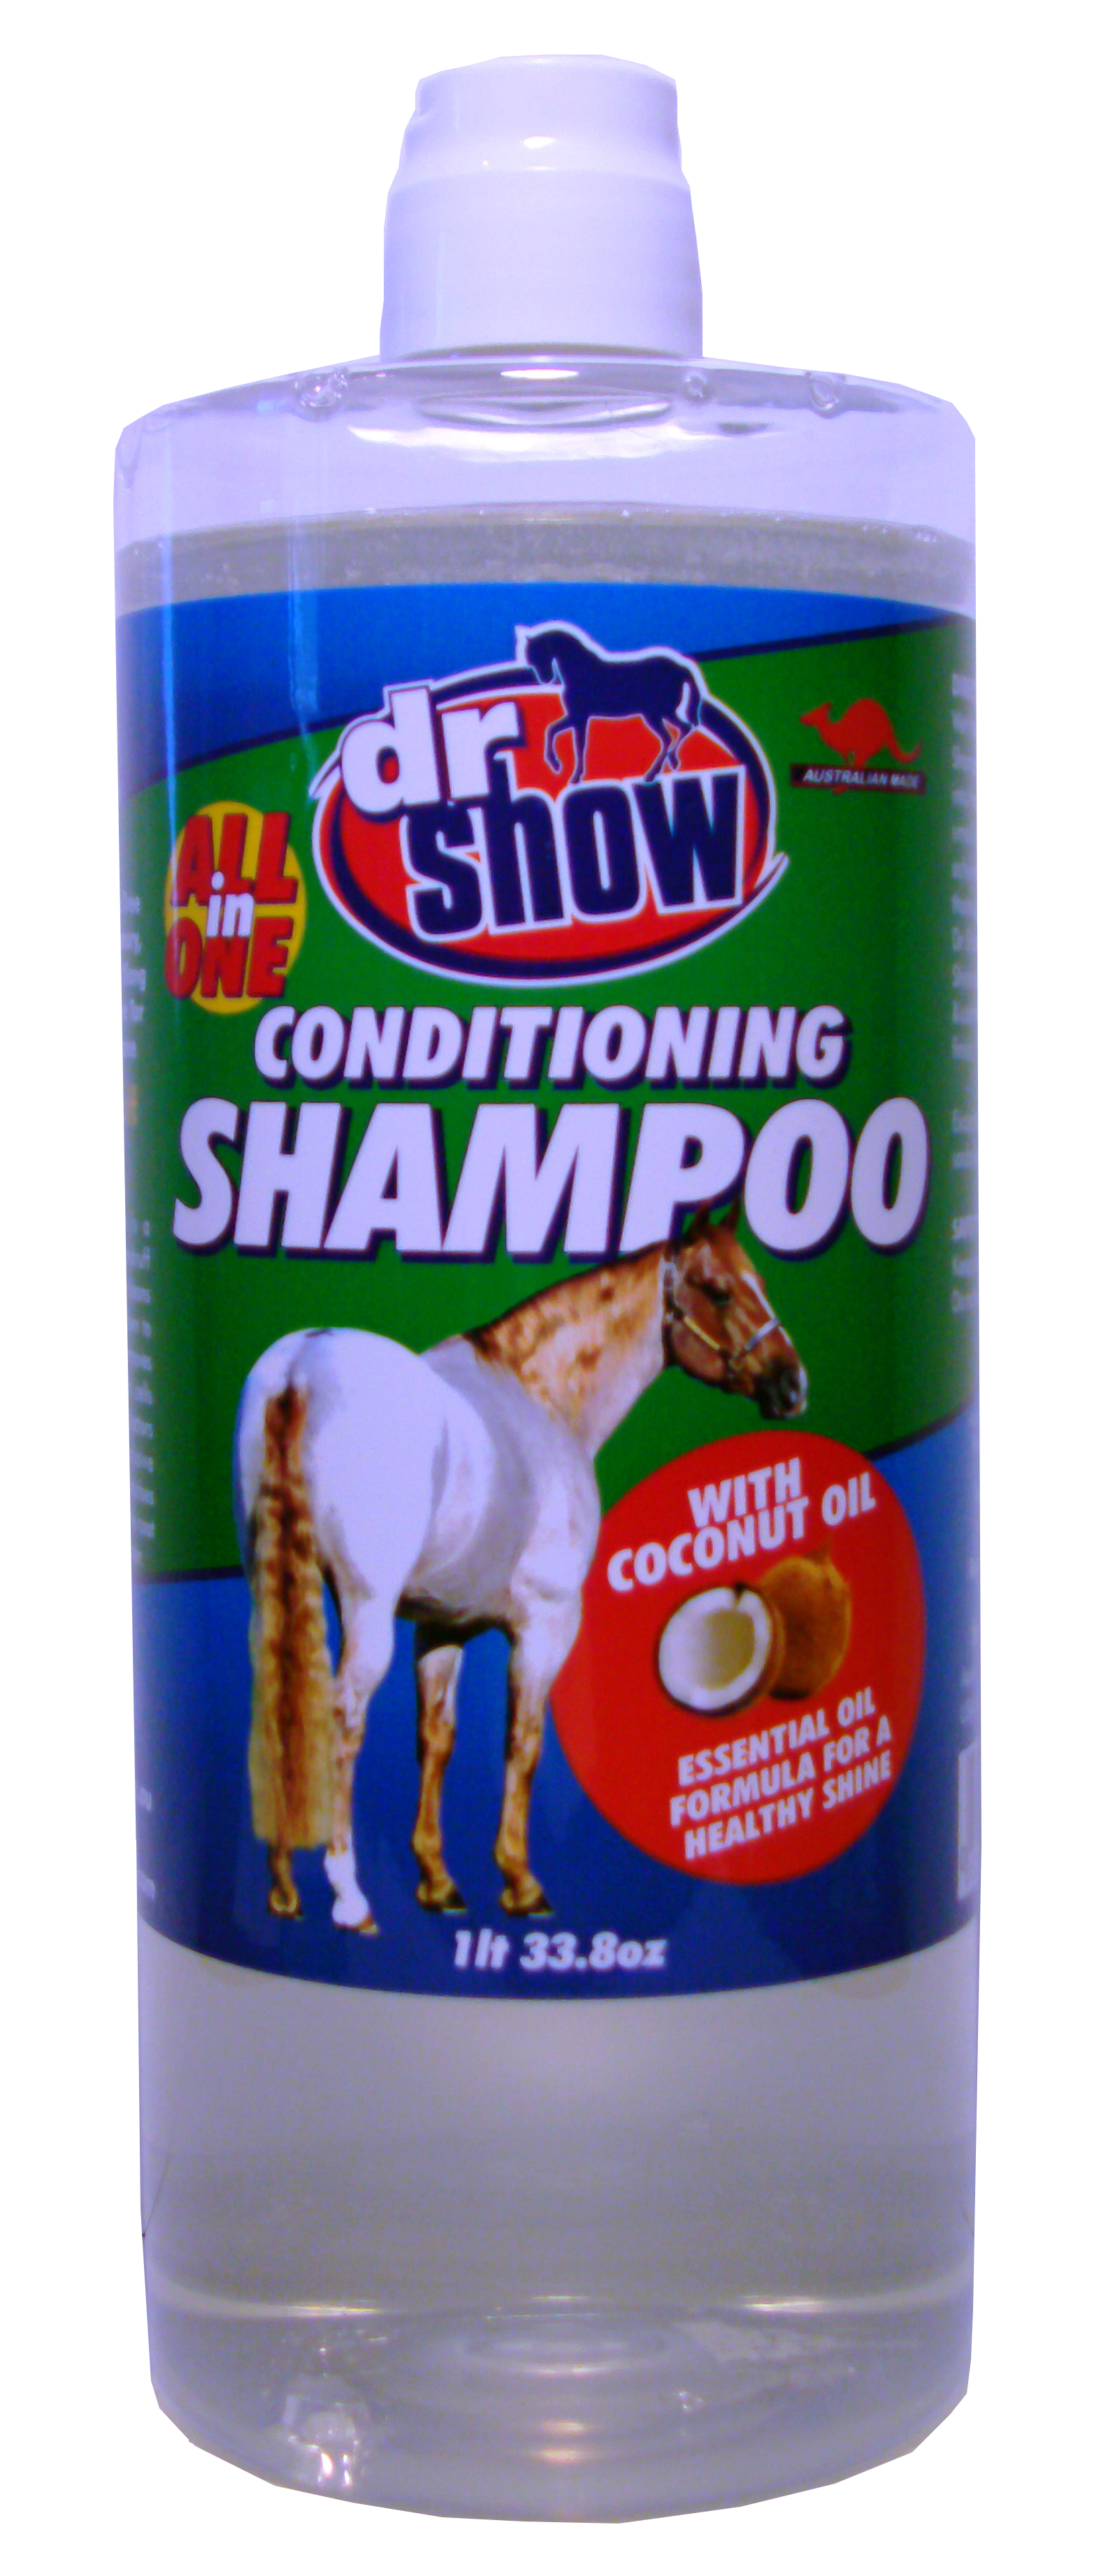 Dr Show Itch Shampoo